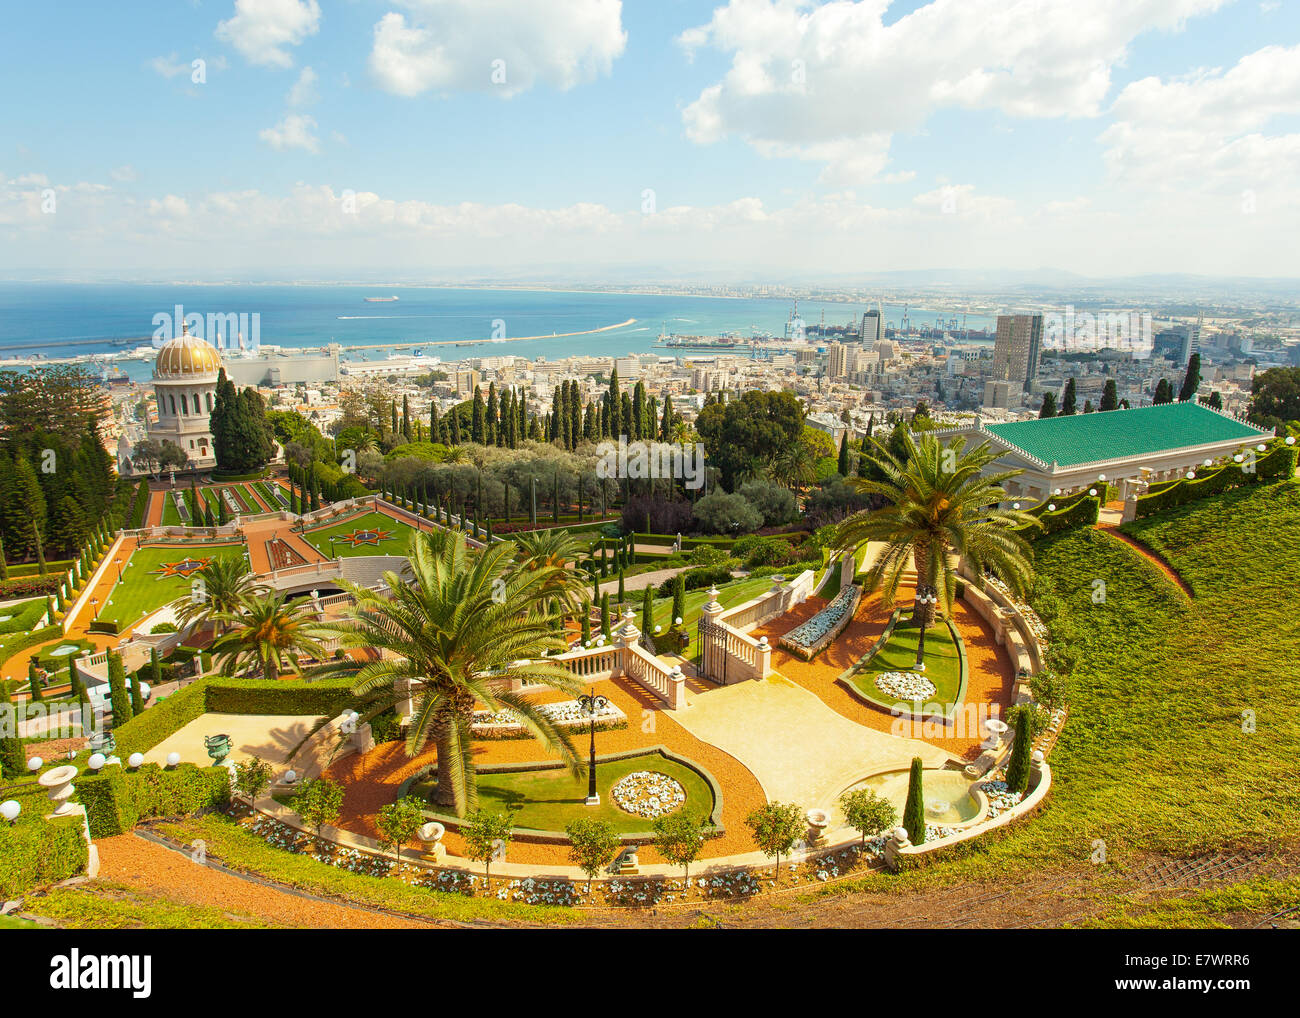 Una bella immagine dei giardini Bahai di Haifa in Israele. Foto Stock